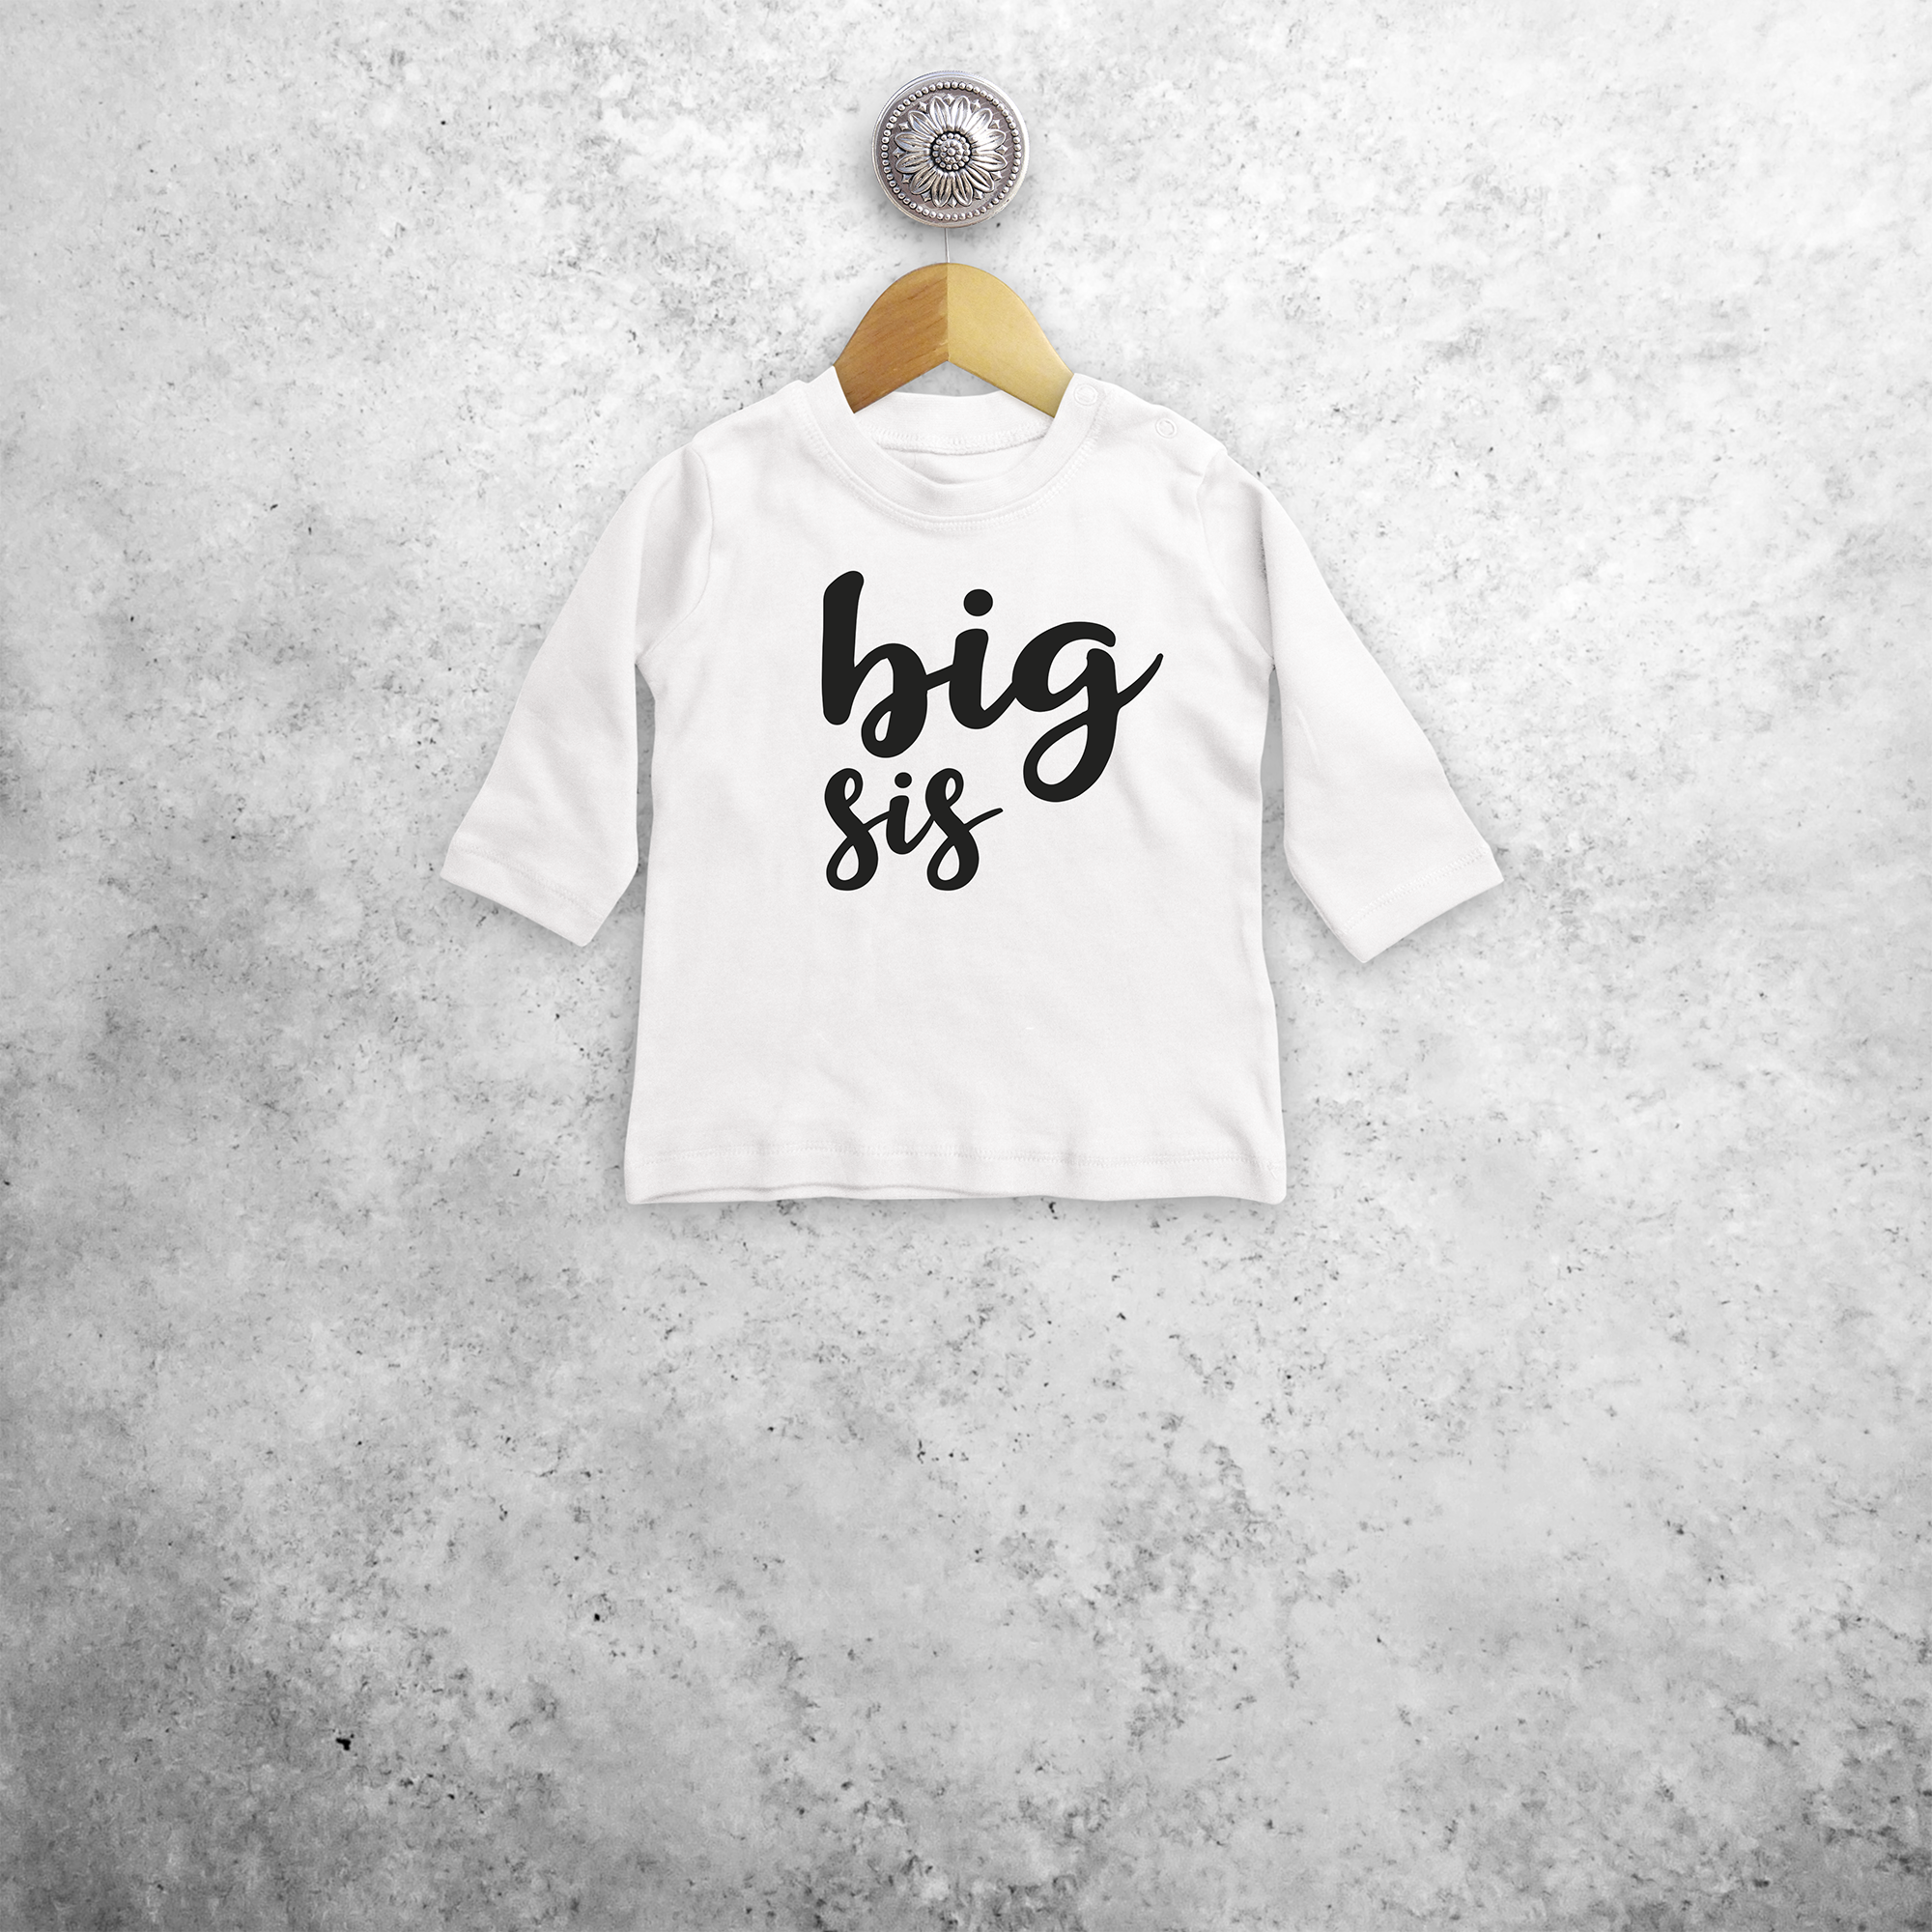 'Big sis' baby longsleeve shirt